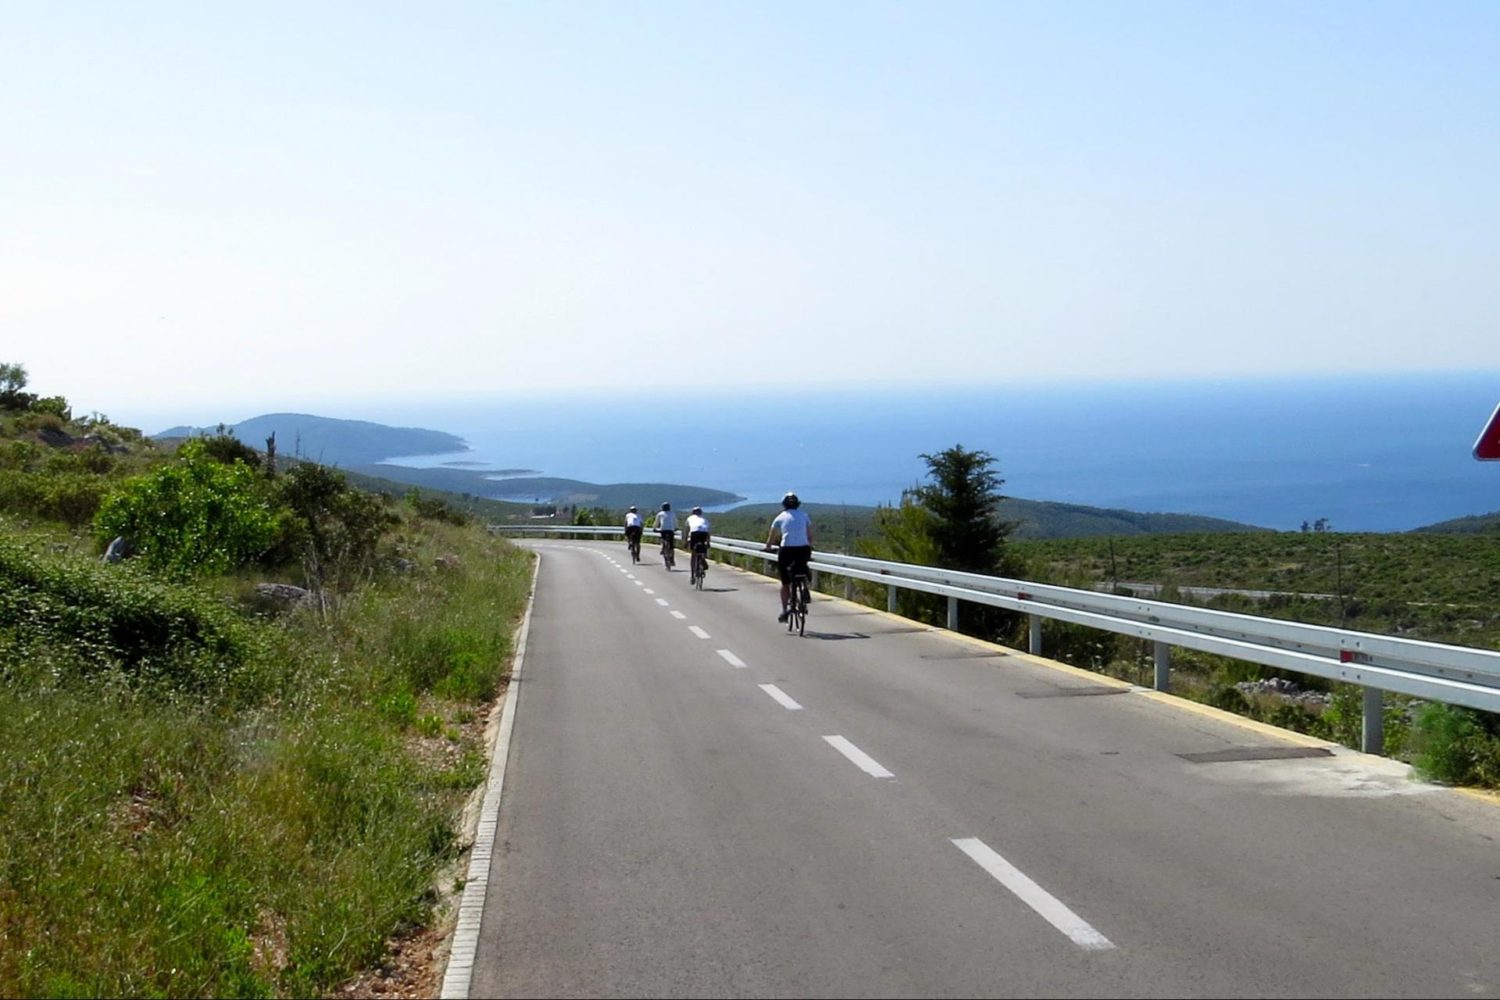 Self guided cycling tour of Croatia's coast and islands